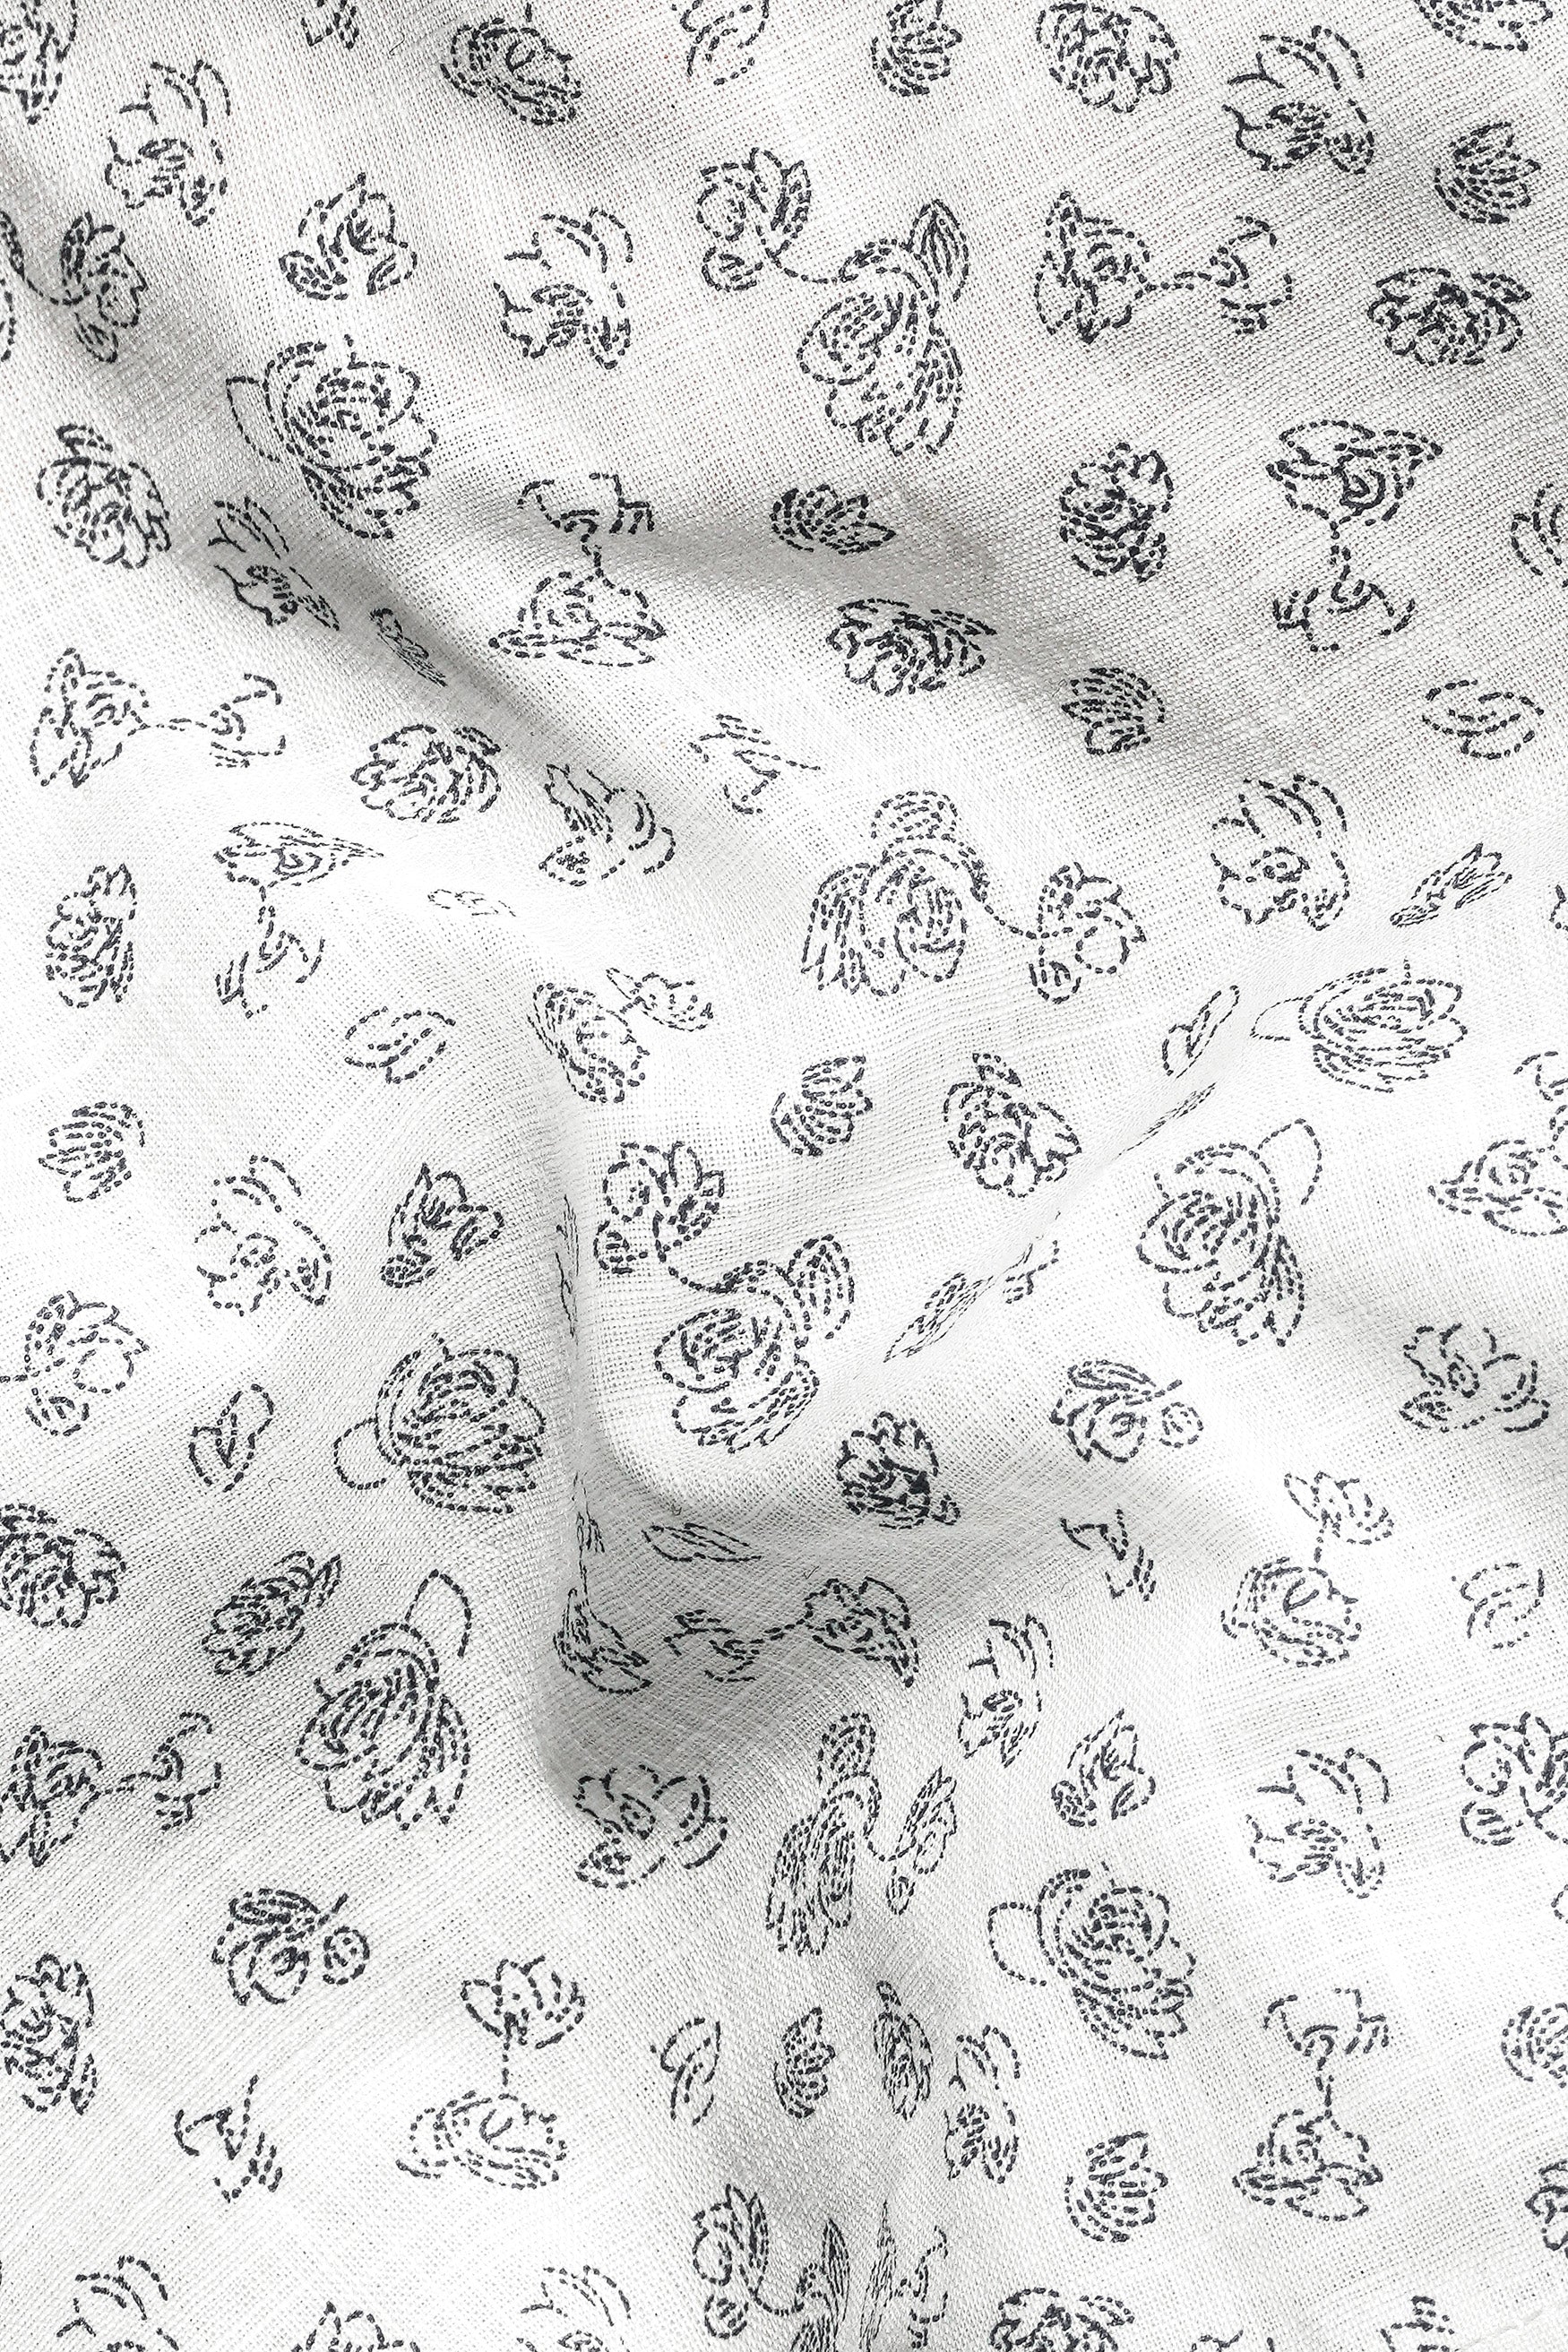 Bright White with Jade Black Flowers Printed Premium Linen Shorts SR347-28,  SR347-30,  SR347-32,  SR347-34,  SR347-36,  SR347-38,  SR347-40,  SR347-42,  SR347-44